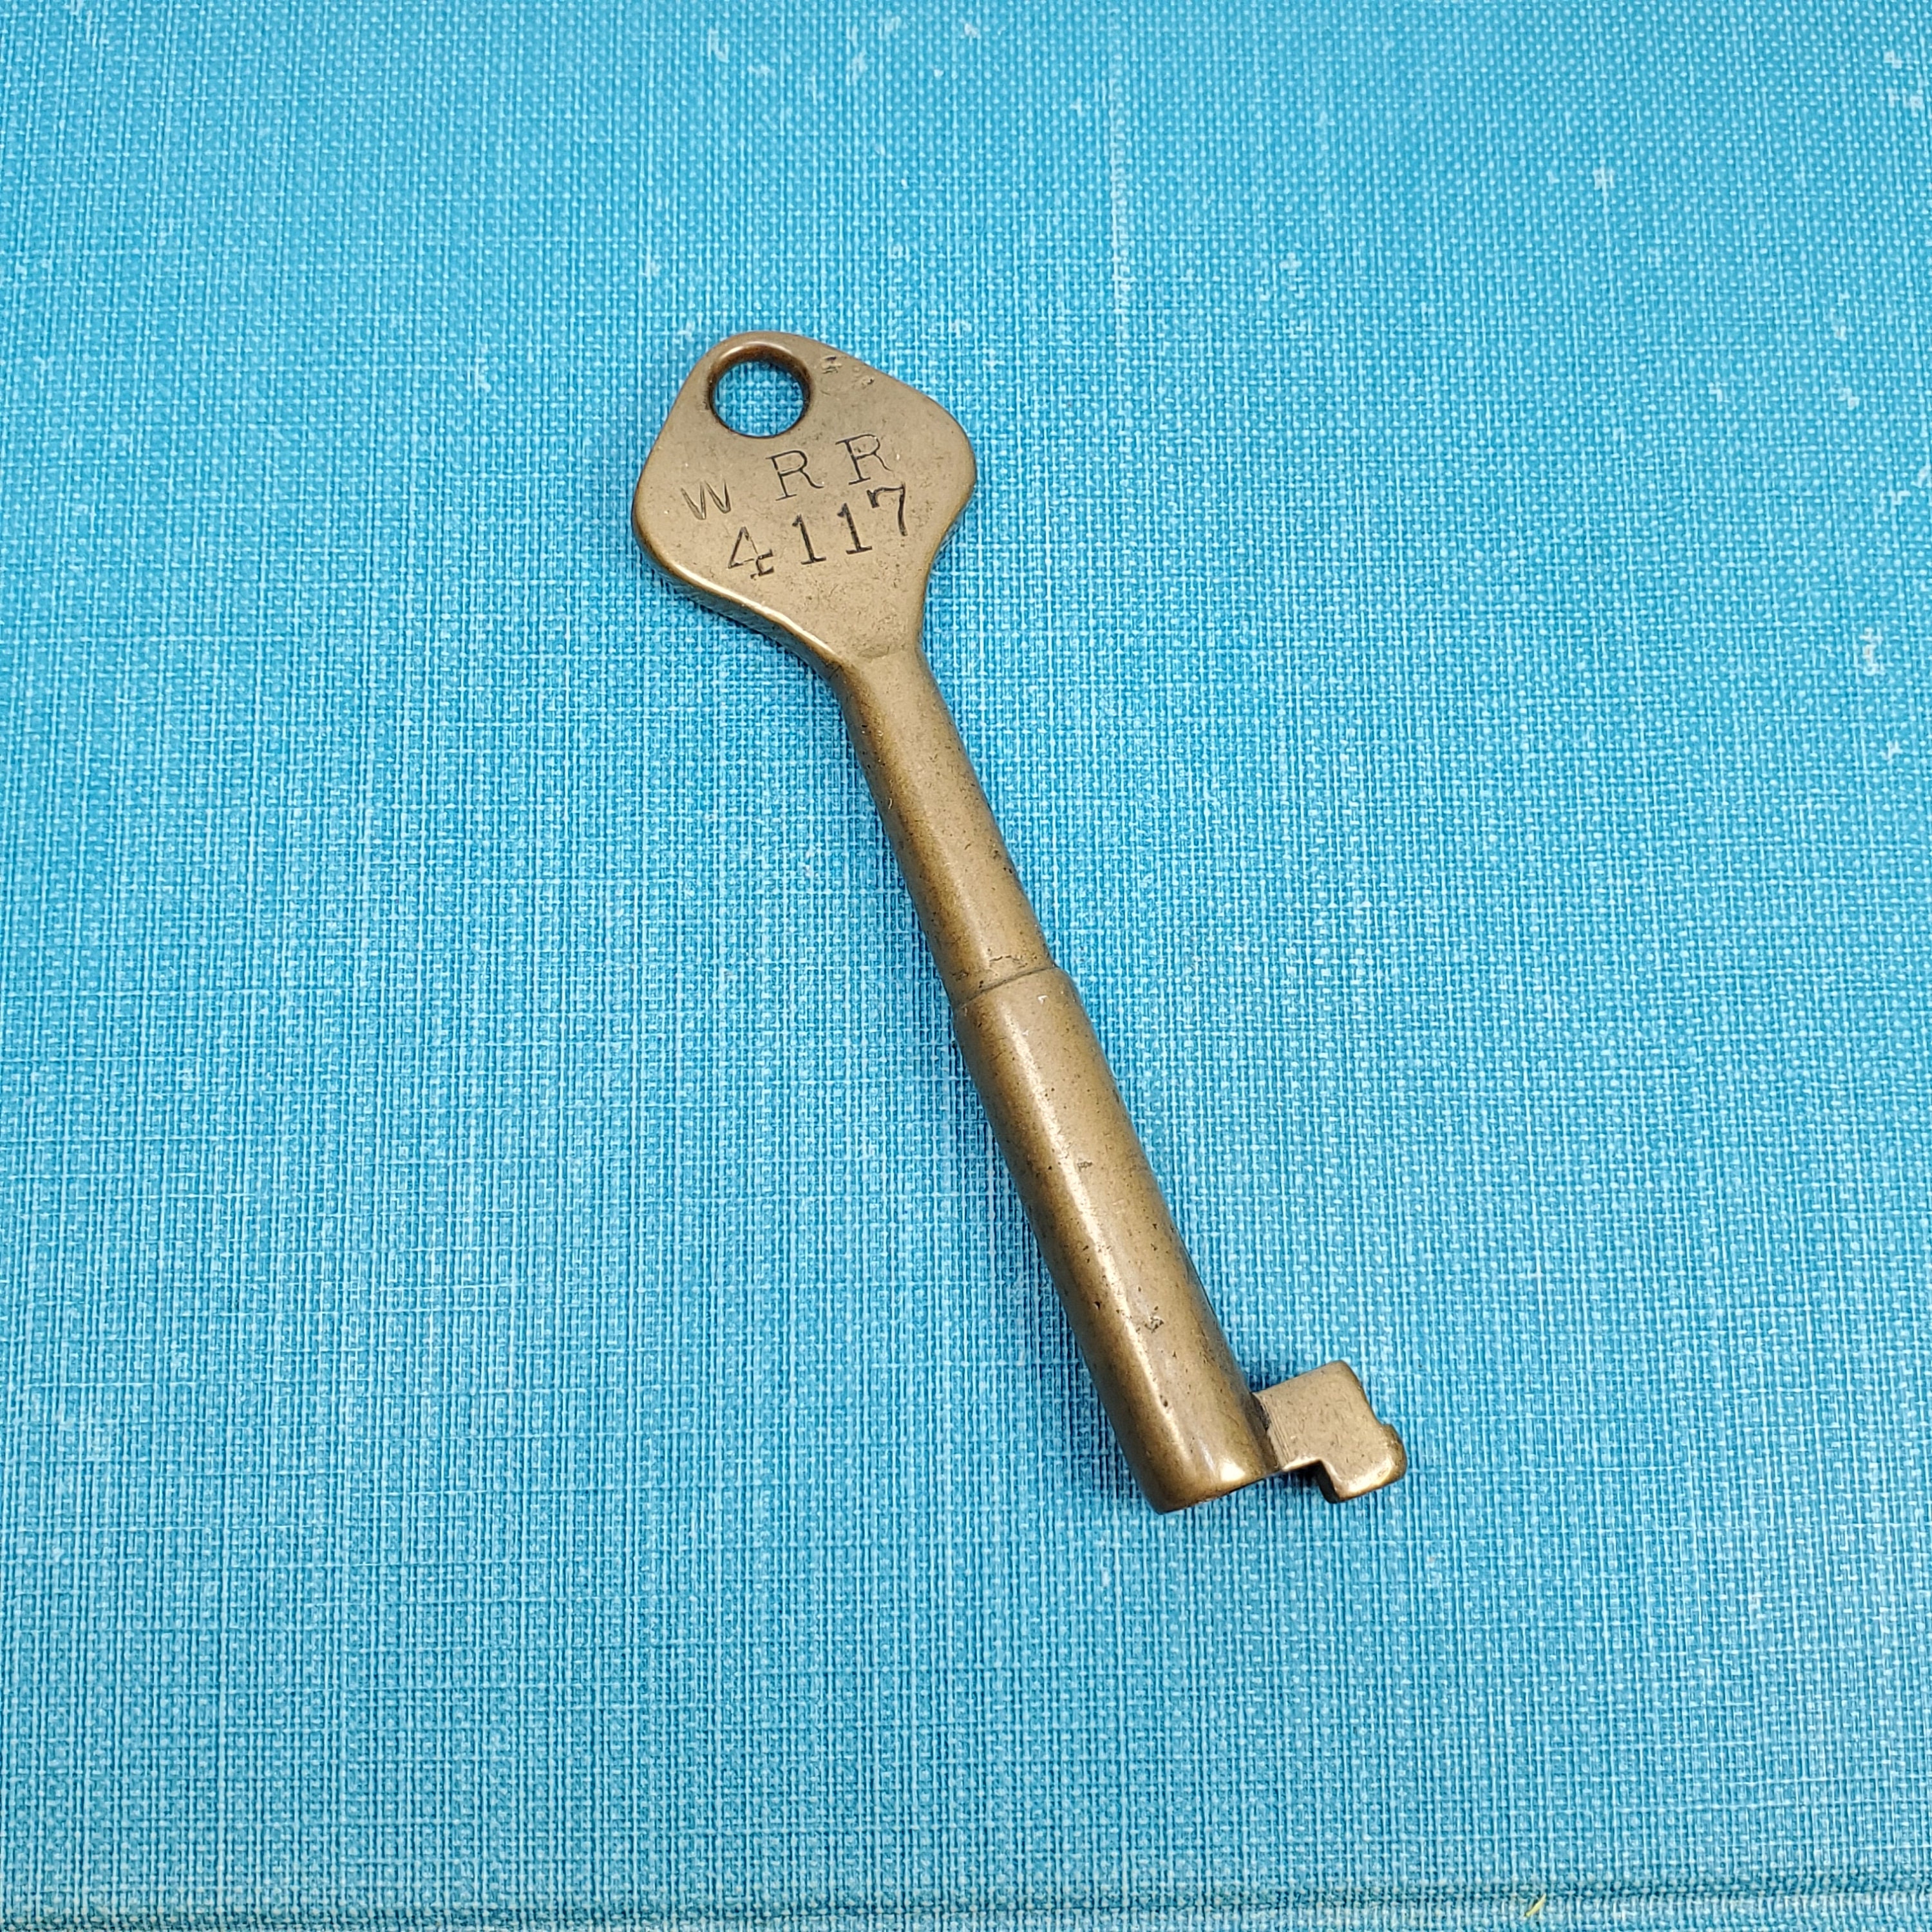 Antique Flat Key, Clover Brand, Flat Brass Key, Antique Pin